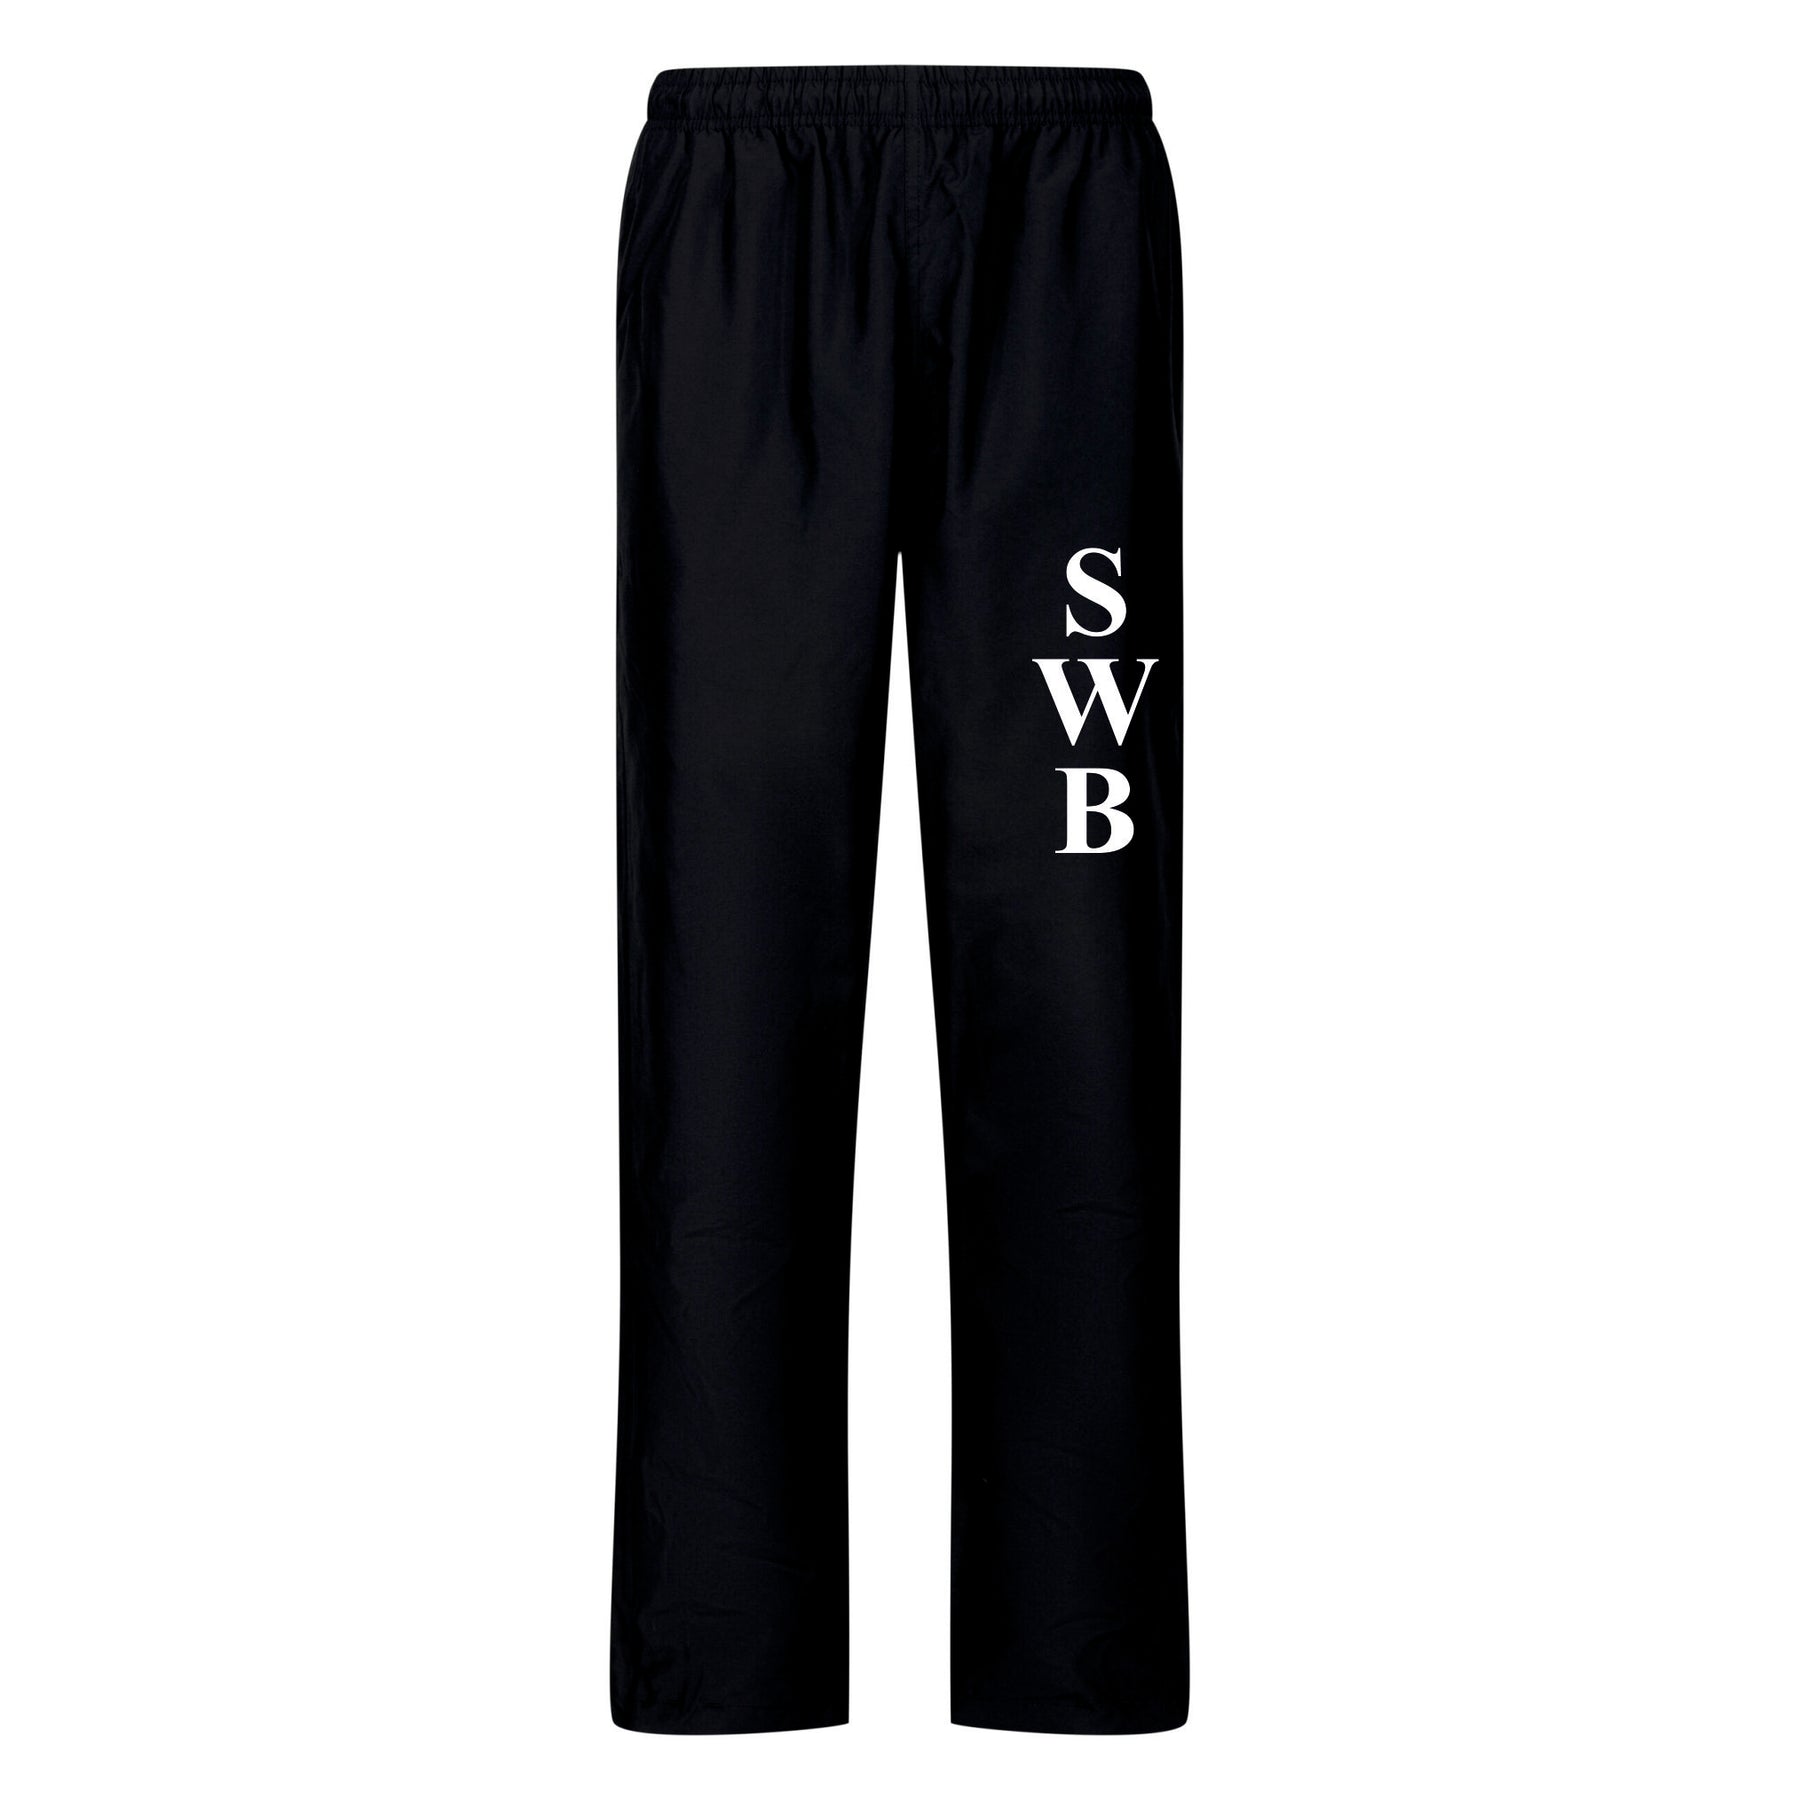 Sir William Borlase Grammar School Unisex Track Trousers: Black